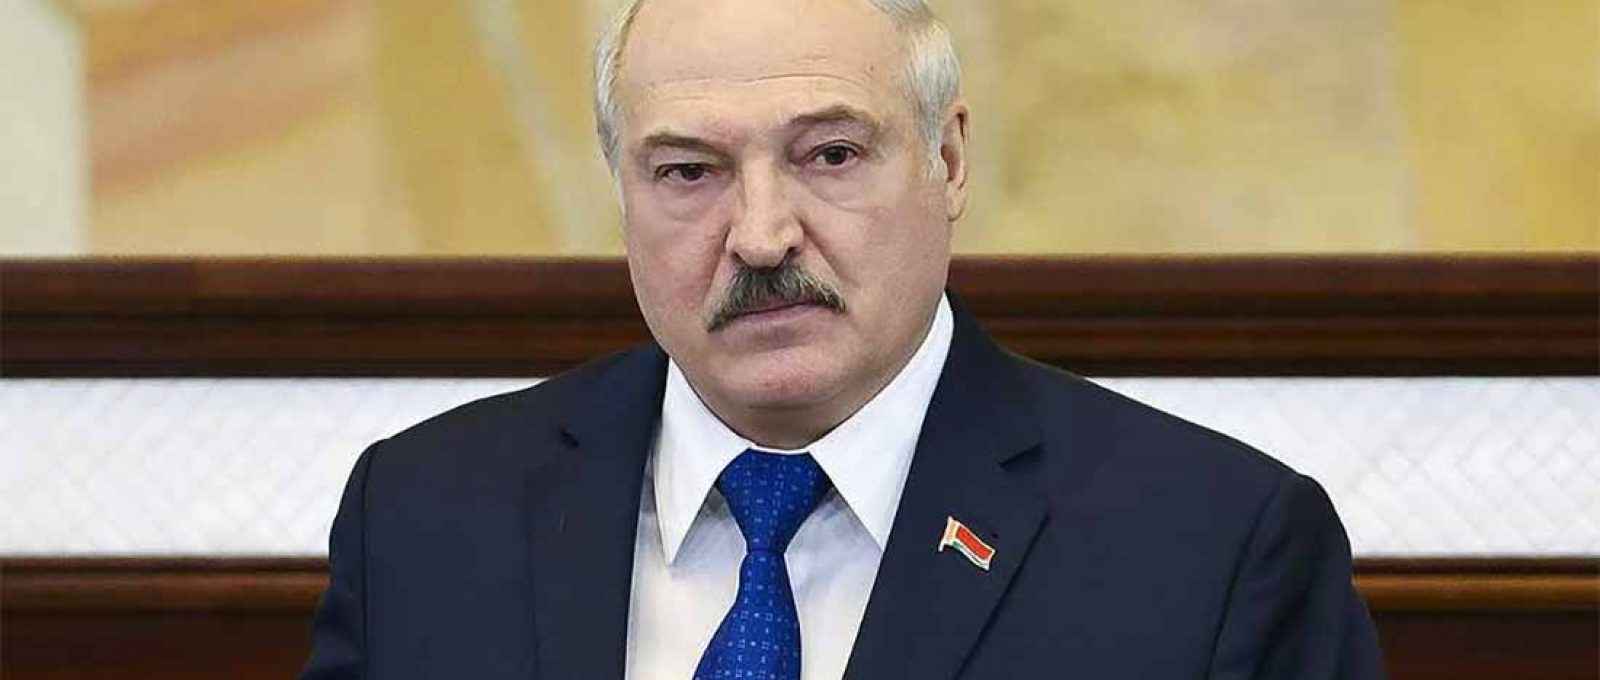 O presidente da Bielorrússia, Alexander Lukashenko (Foto: Sergei Shelega/BelTA).